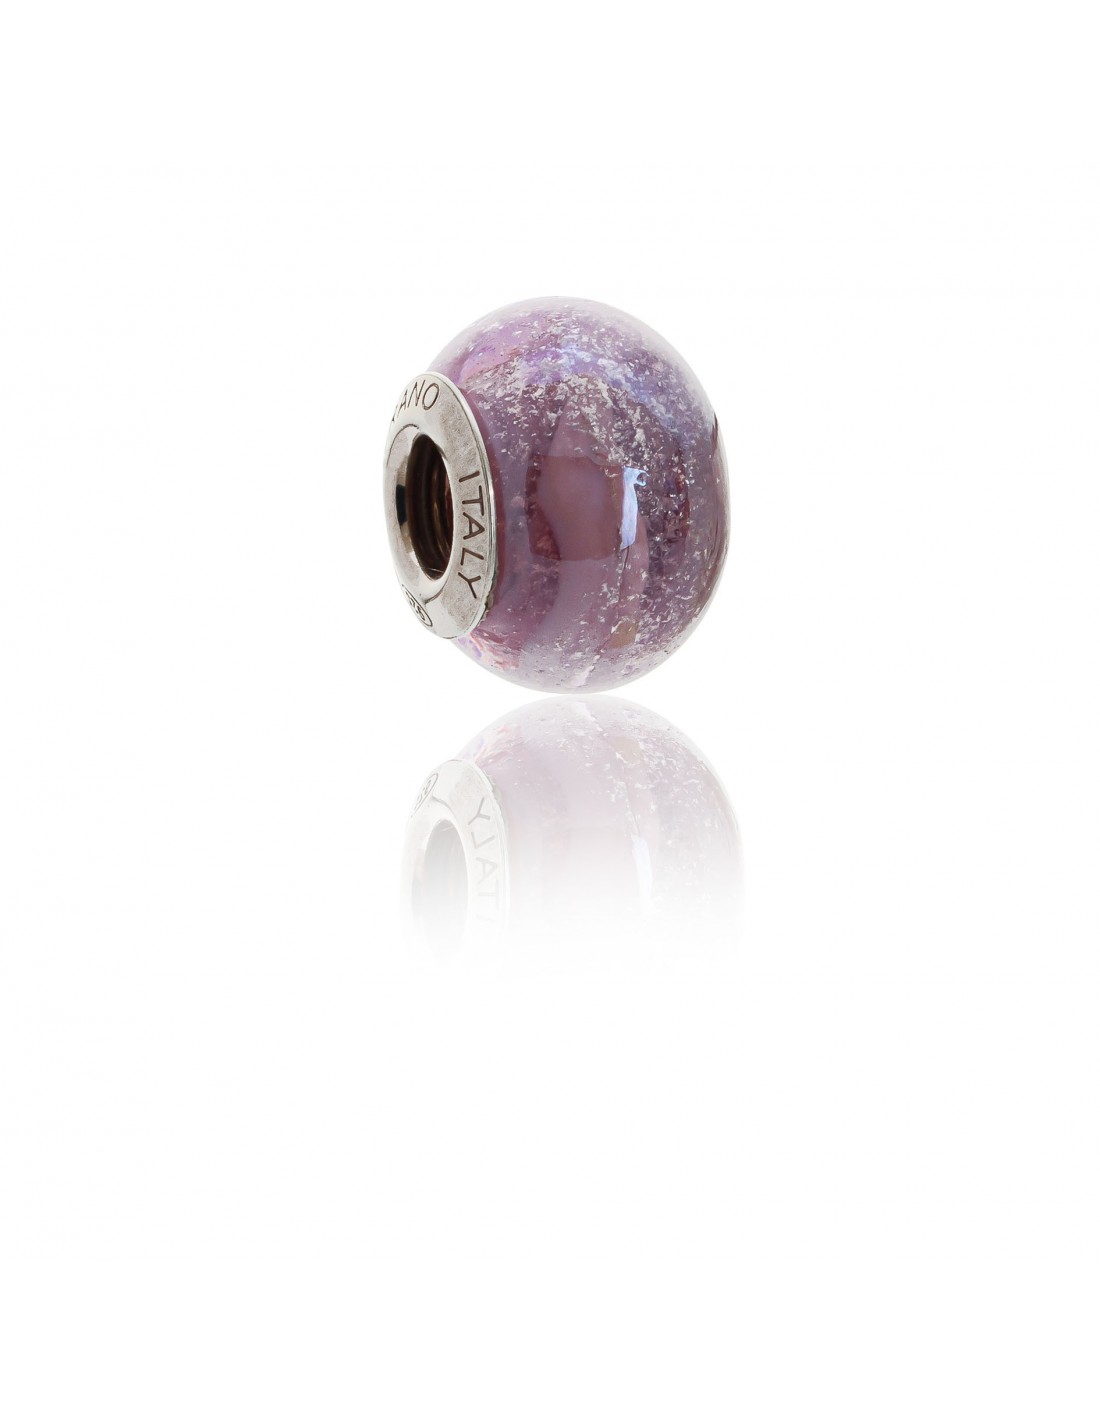 Moonlight Collection - Murano Glass Bracelet , Handmade Artisanal Products  - Work of Artisans